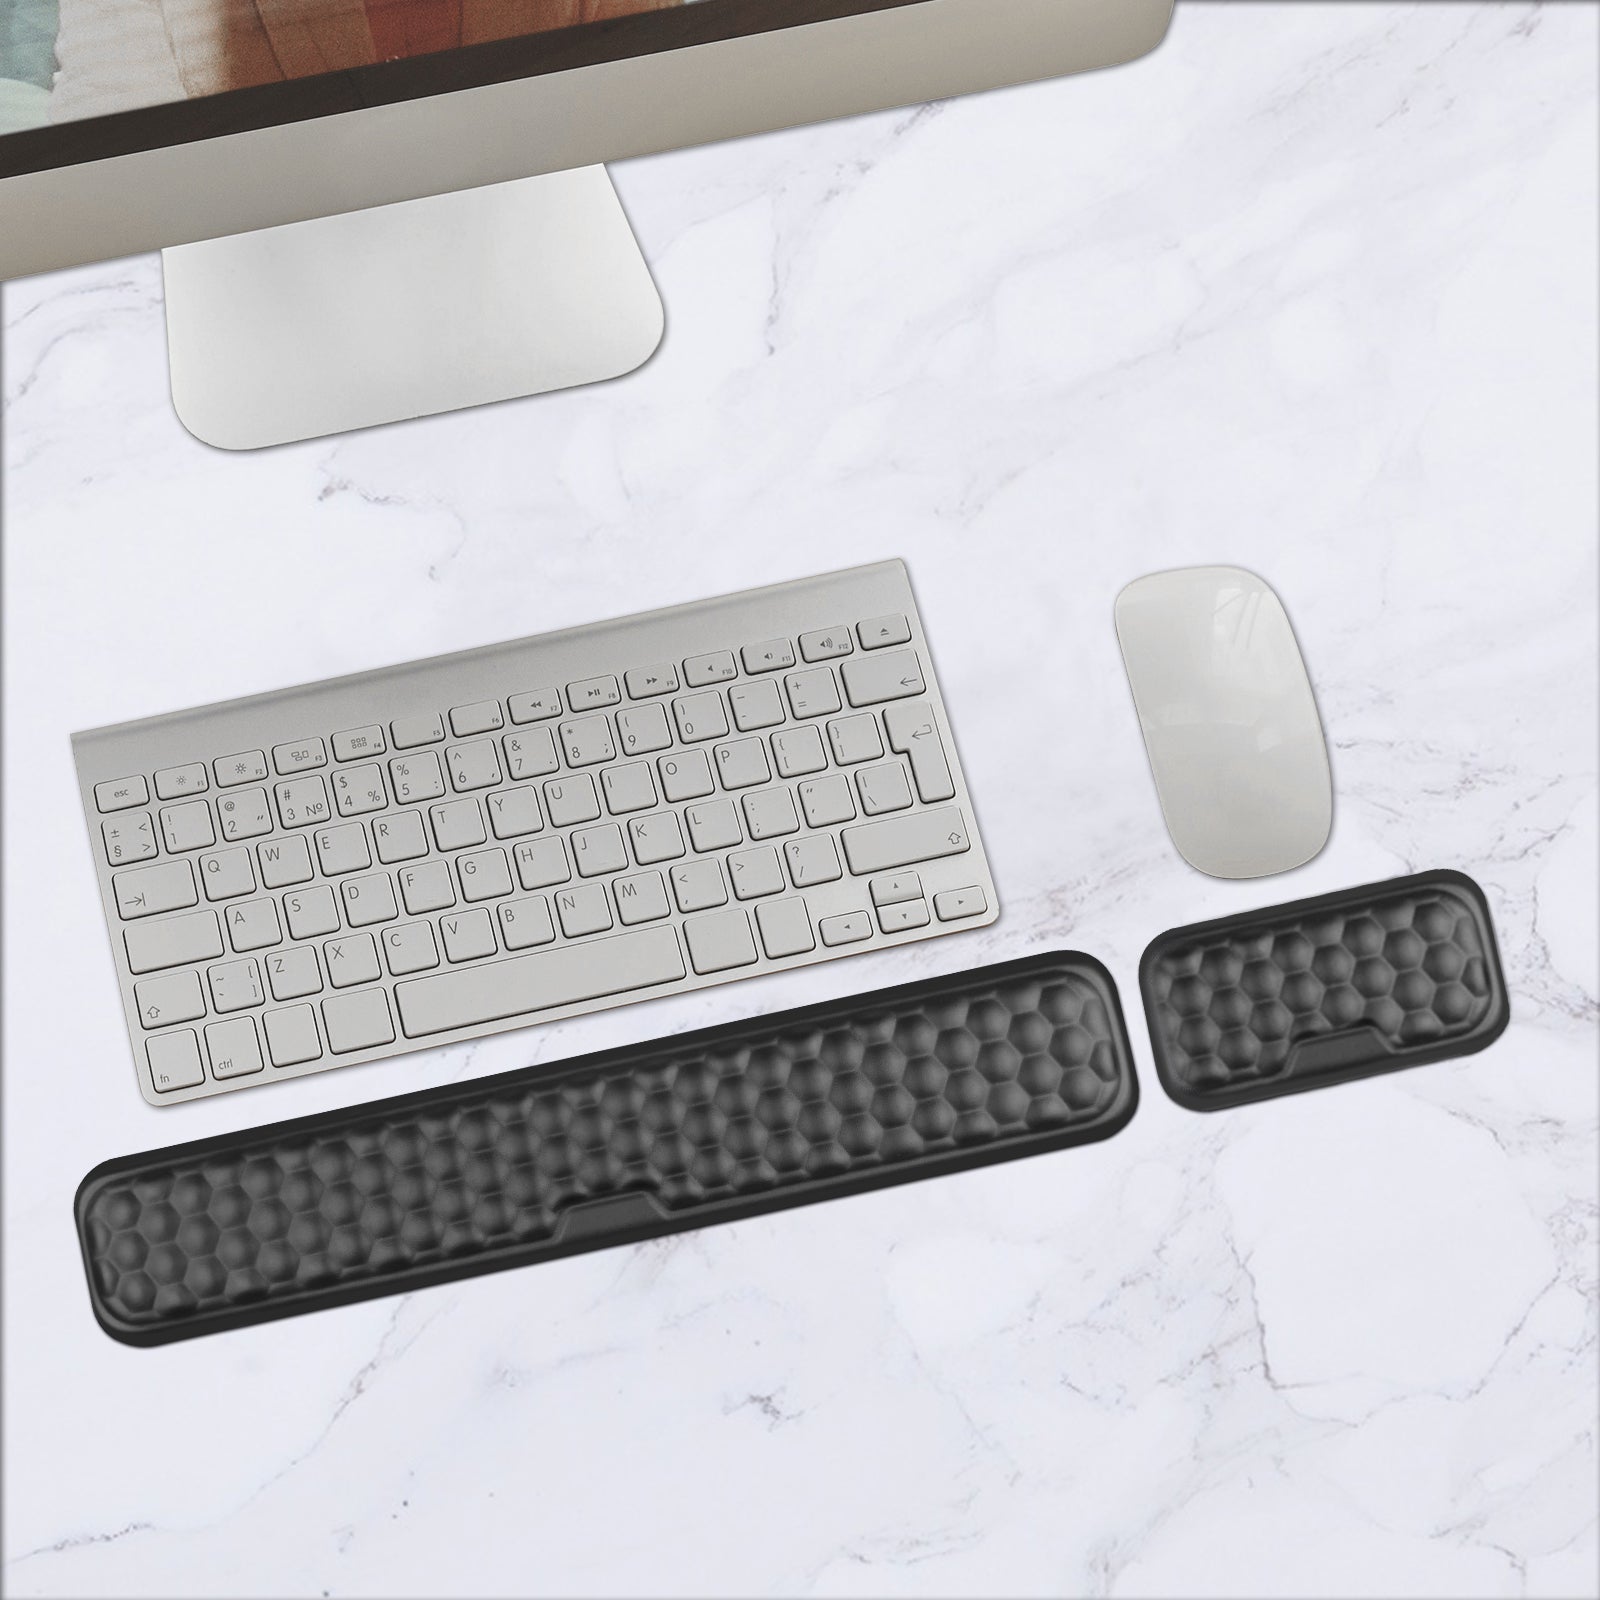 Kretech High quality Non-Slip Mouse Pad With Gel Wrist Rest Support For  Computer & Laptop Mousepad (Black) Mousepad - Kretech 